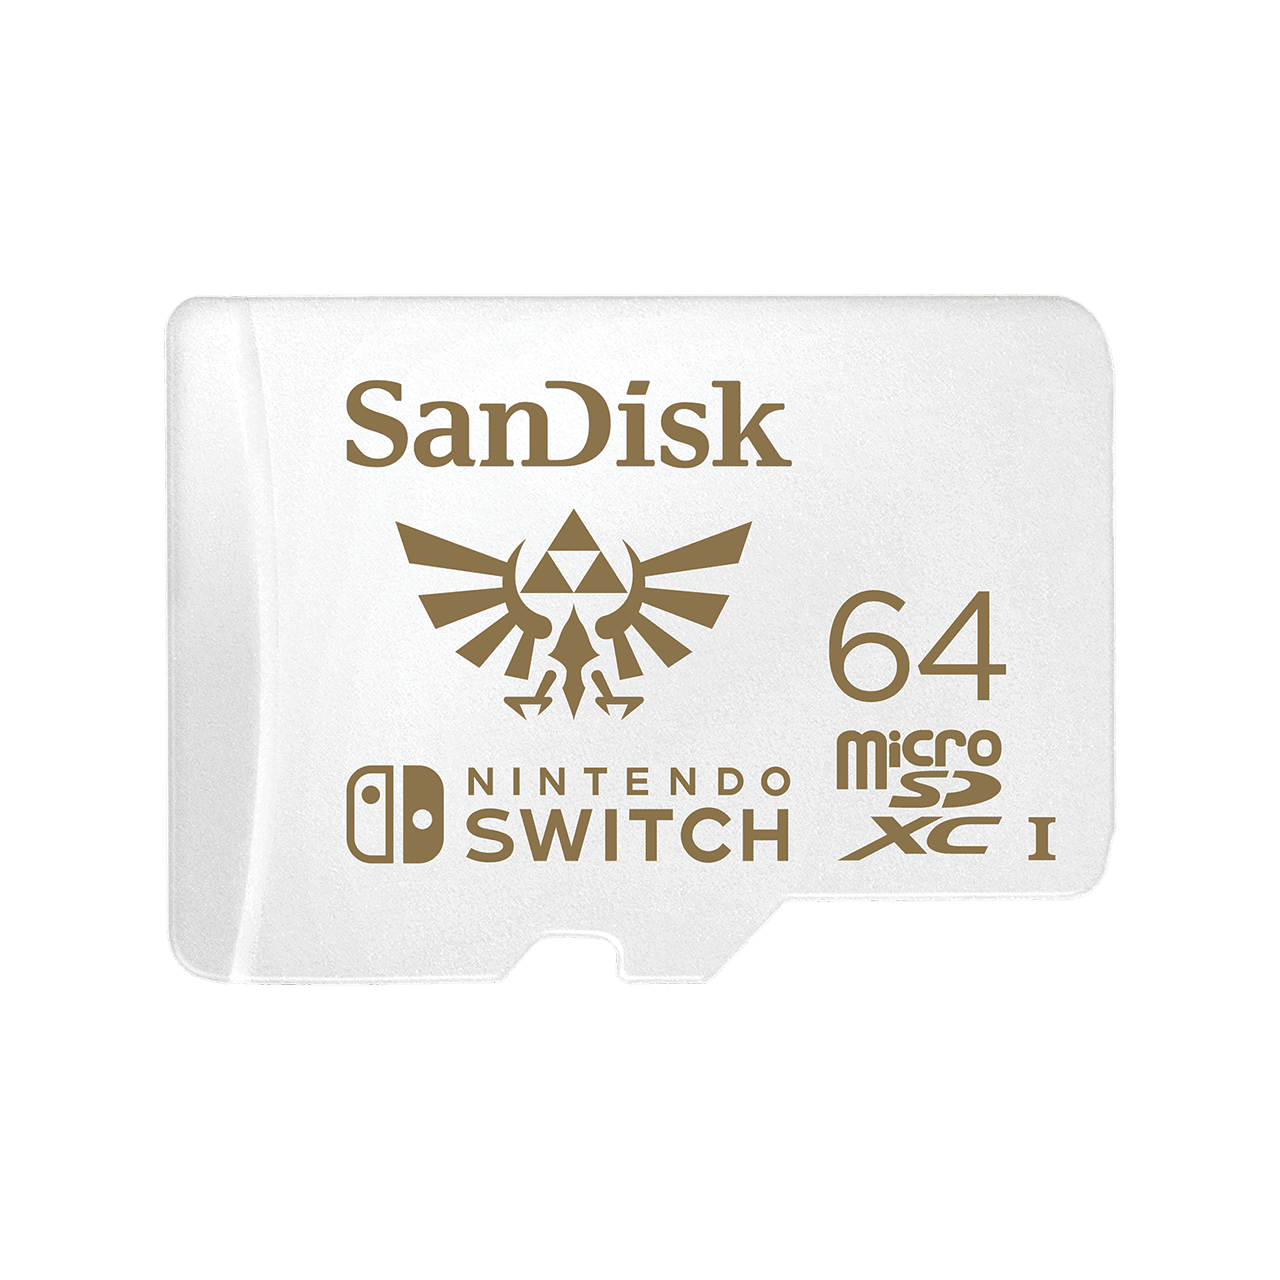 Nintendo Switch 64GB microSDXC Card from SanDisk